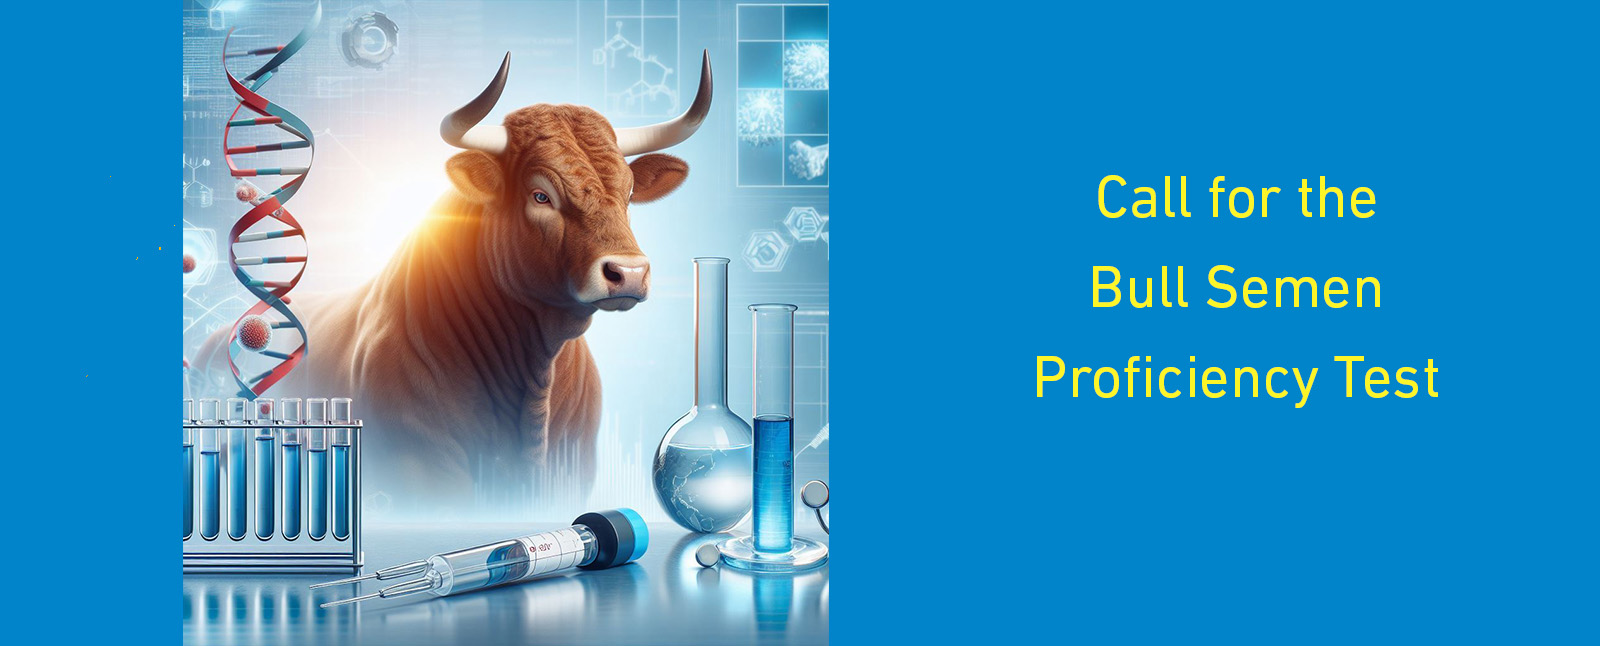 New ICAR Service: Bull Semen Proficiency Test